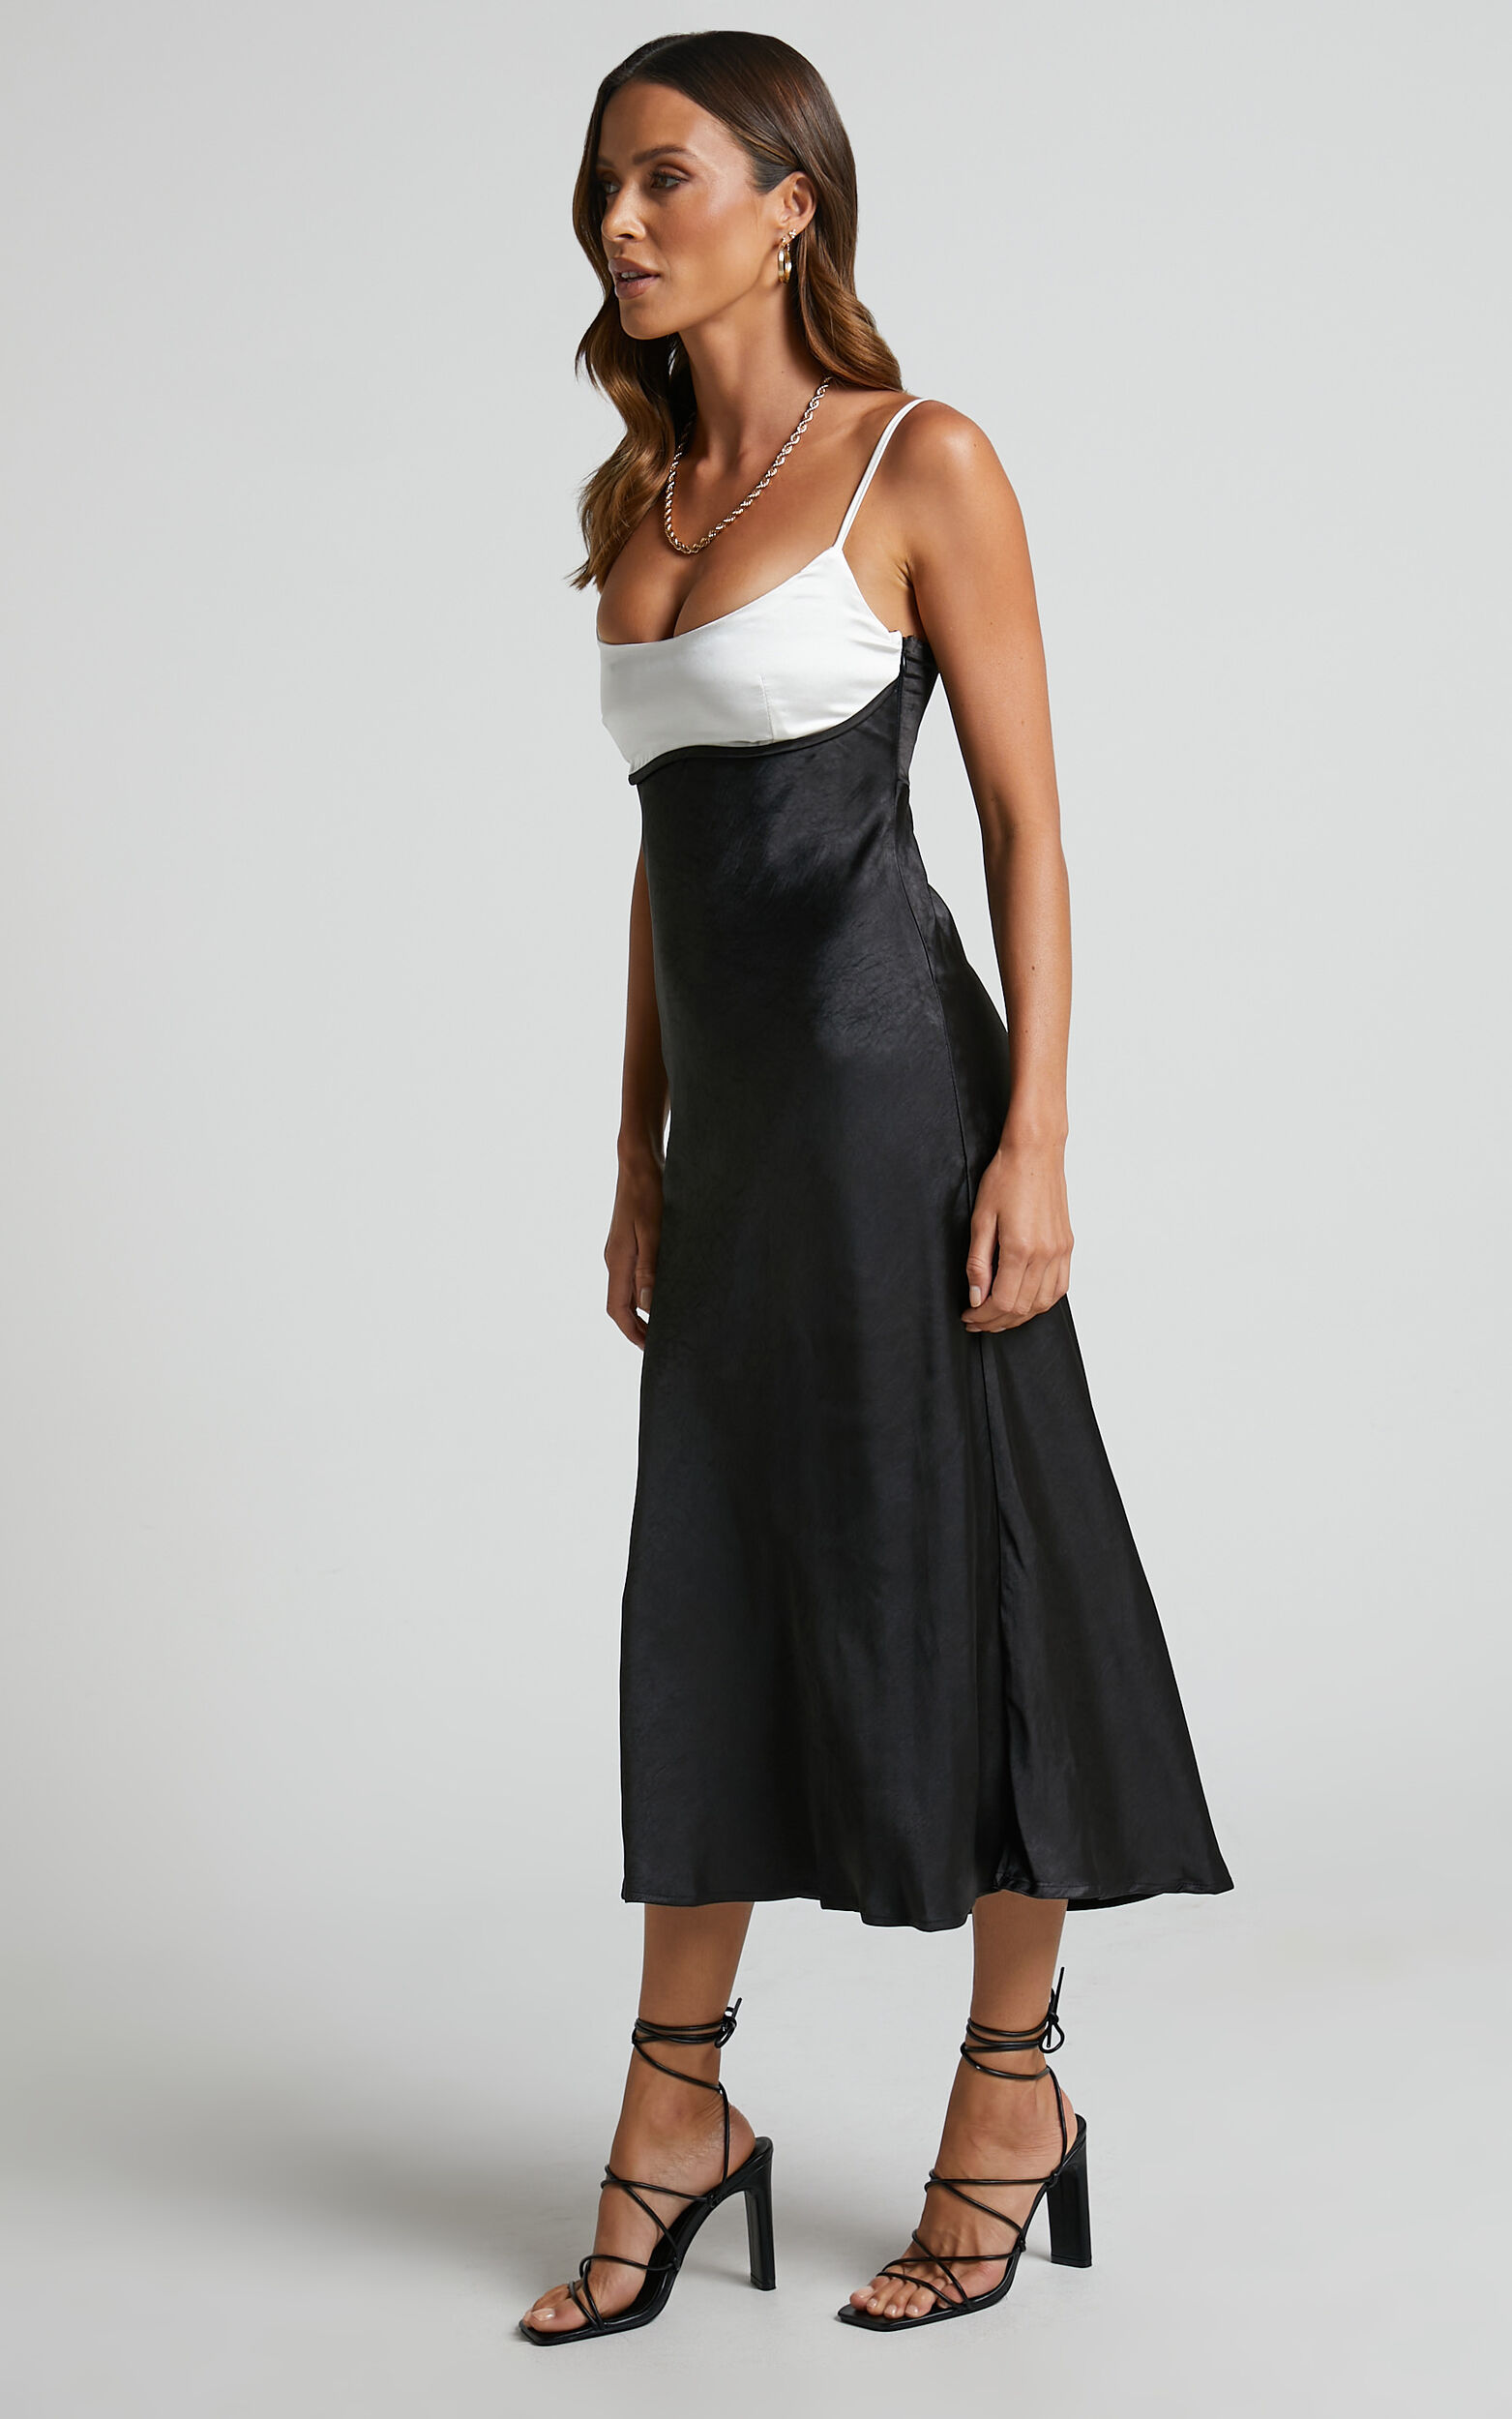 Built-in Bra Black Slip Dress for Women - Midi Satin Cocktail